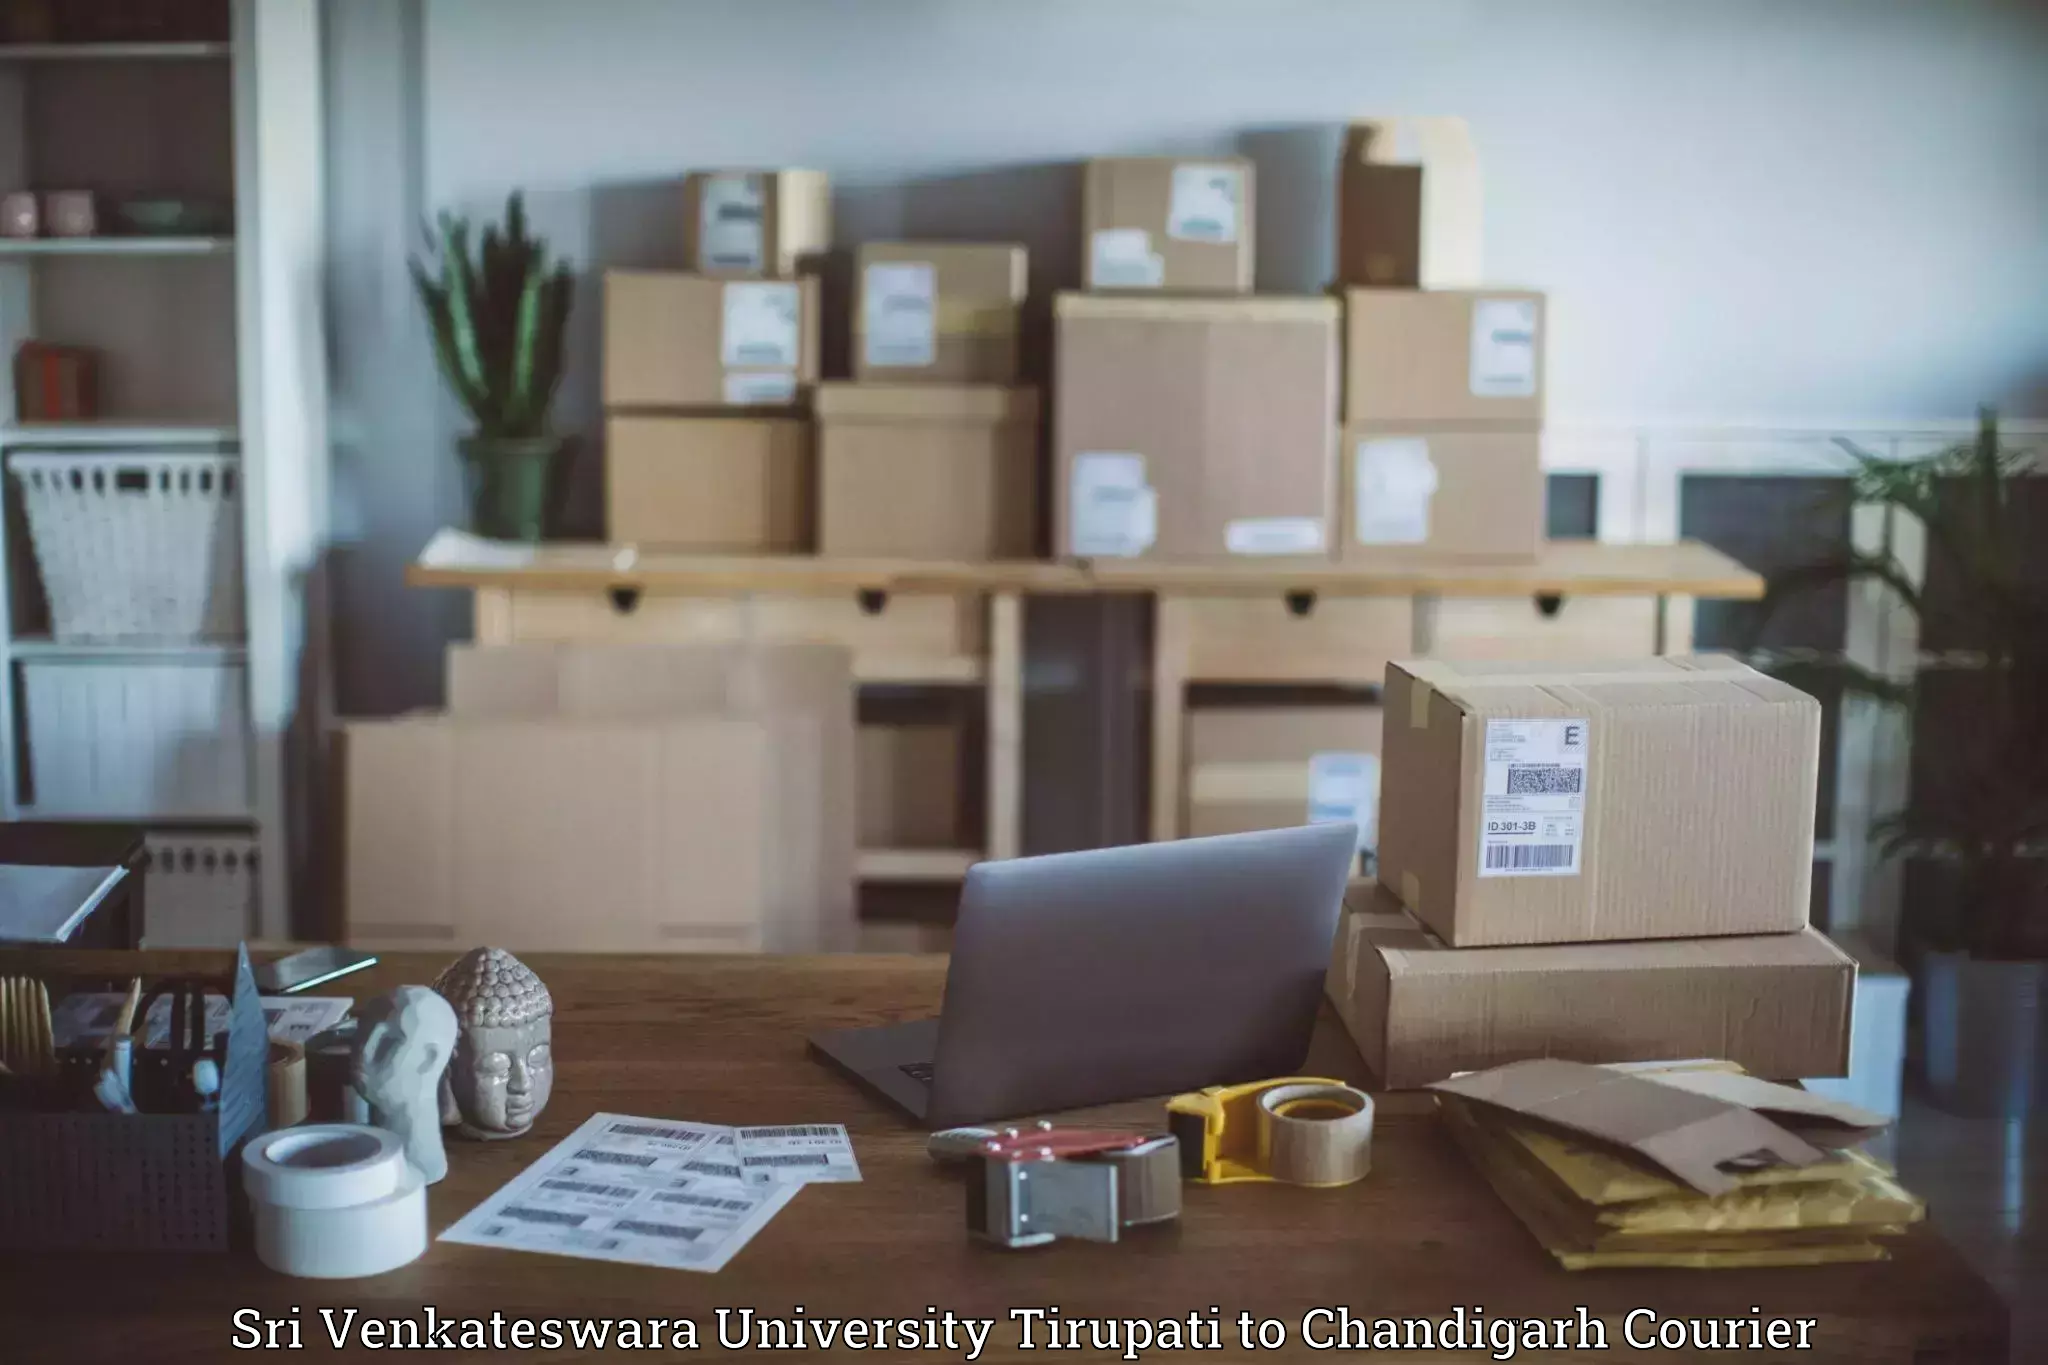 Express delivery network Sri Venkateswara University Tirupati to Chandigarh